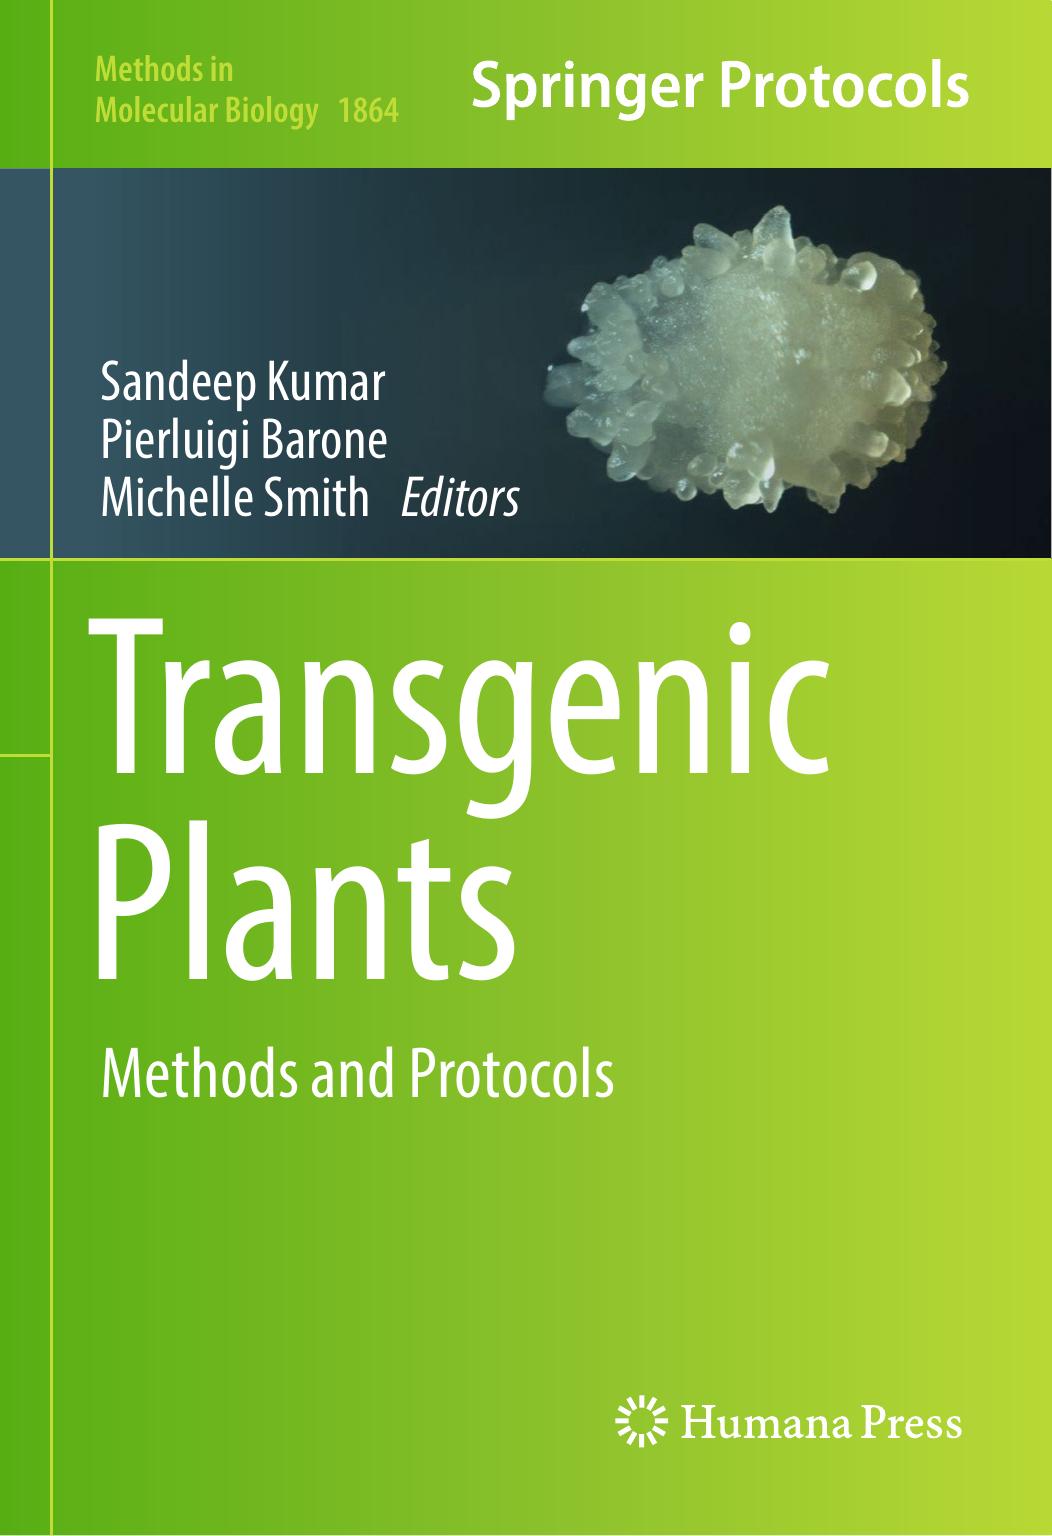 Transgenic Plants Methods and Protocols 2019